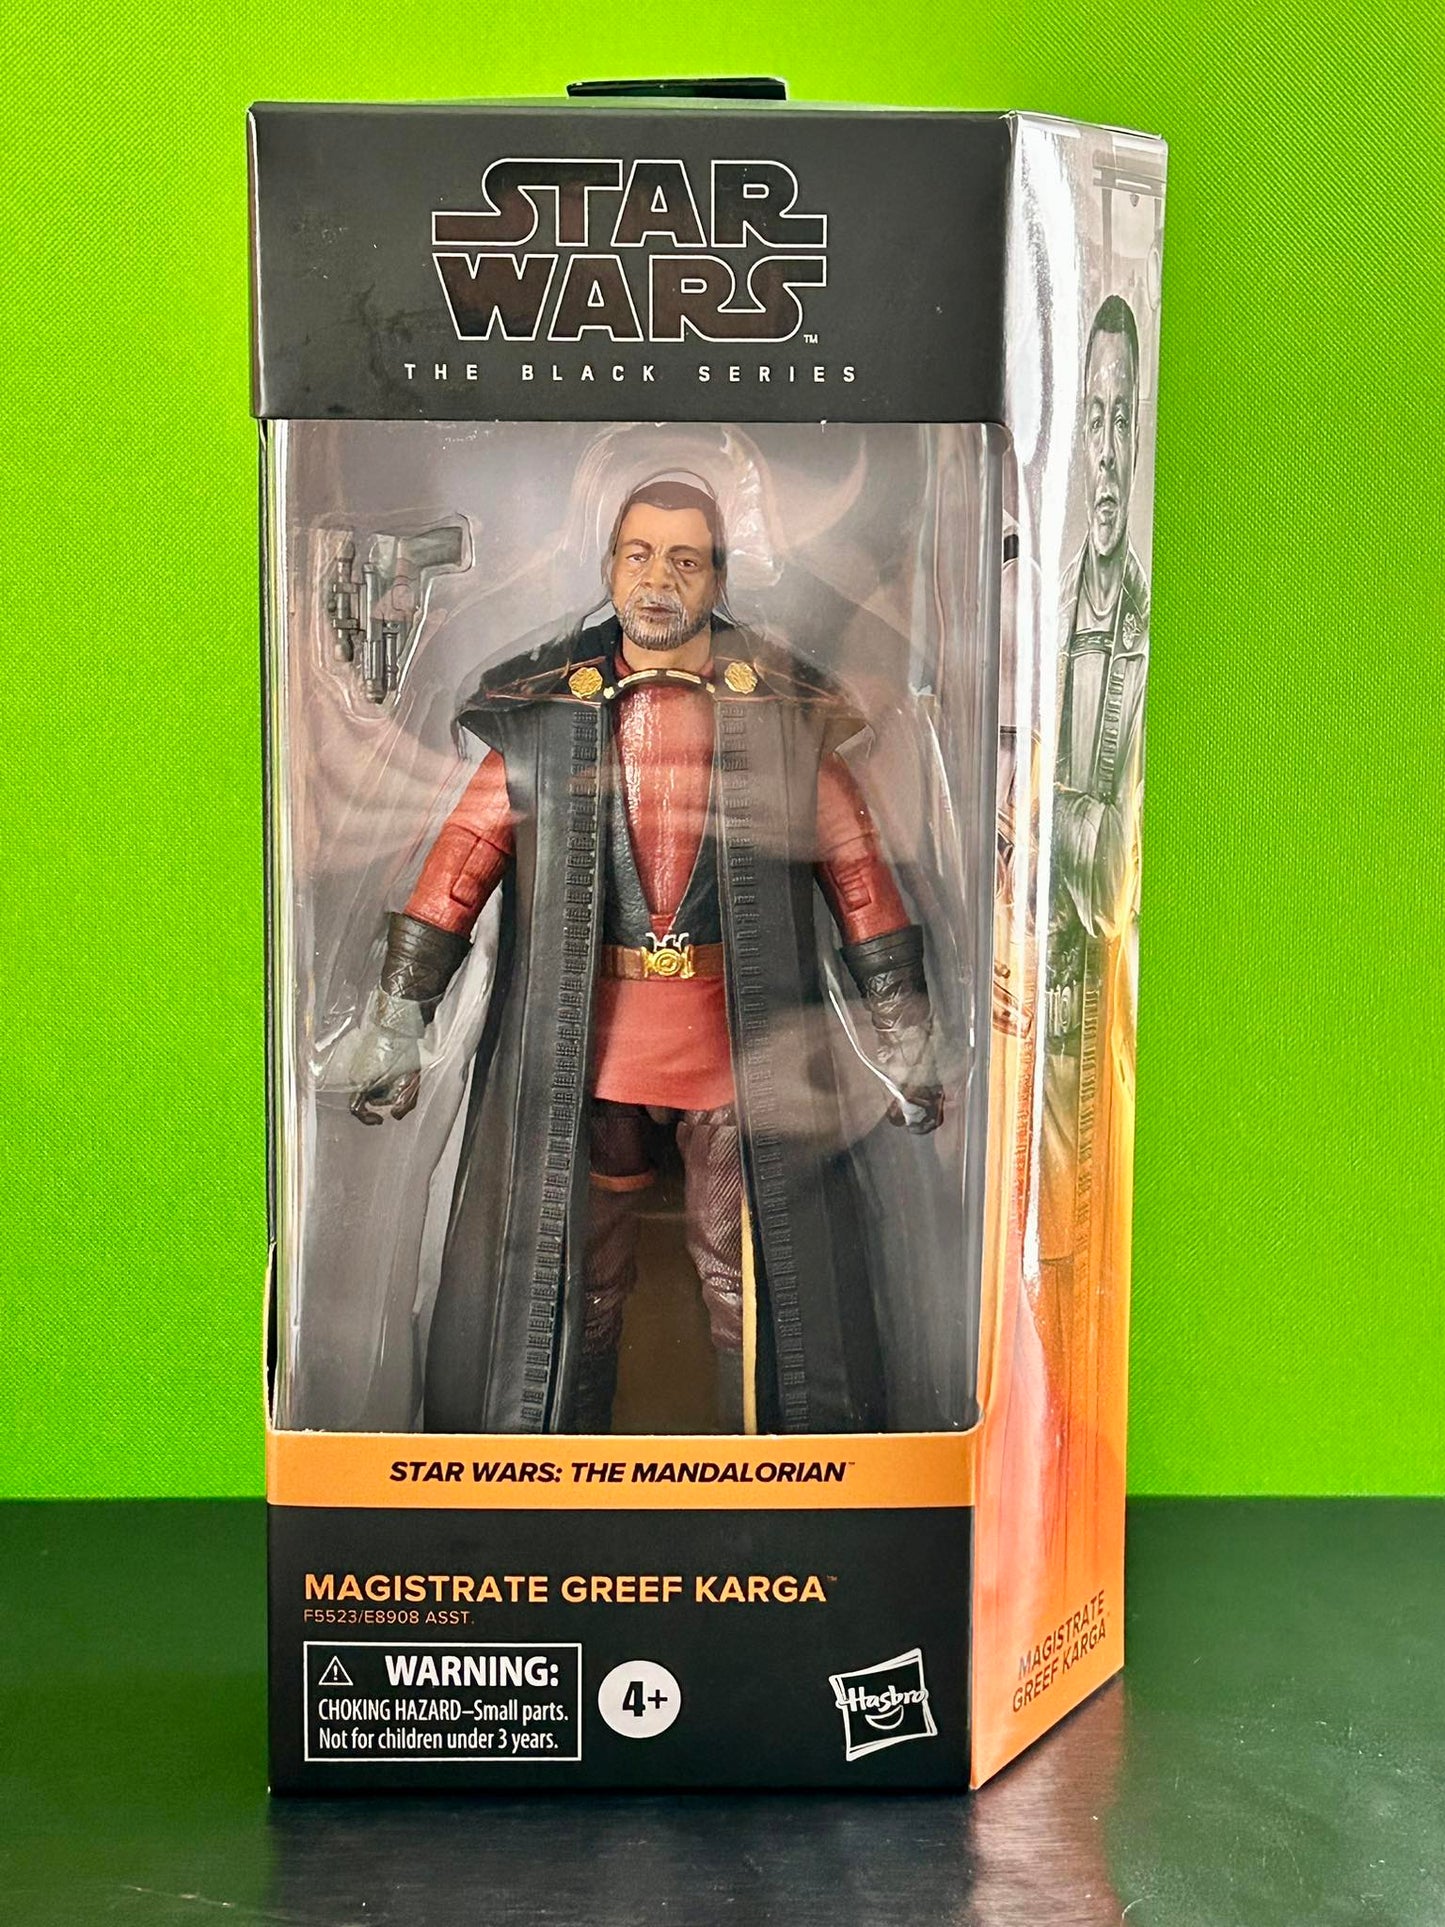 Star Wars The Black Series - Figurine d'action du magistrat Greef Karga 15cm